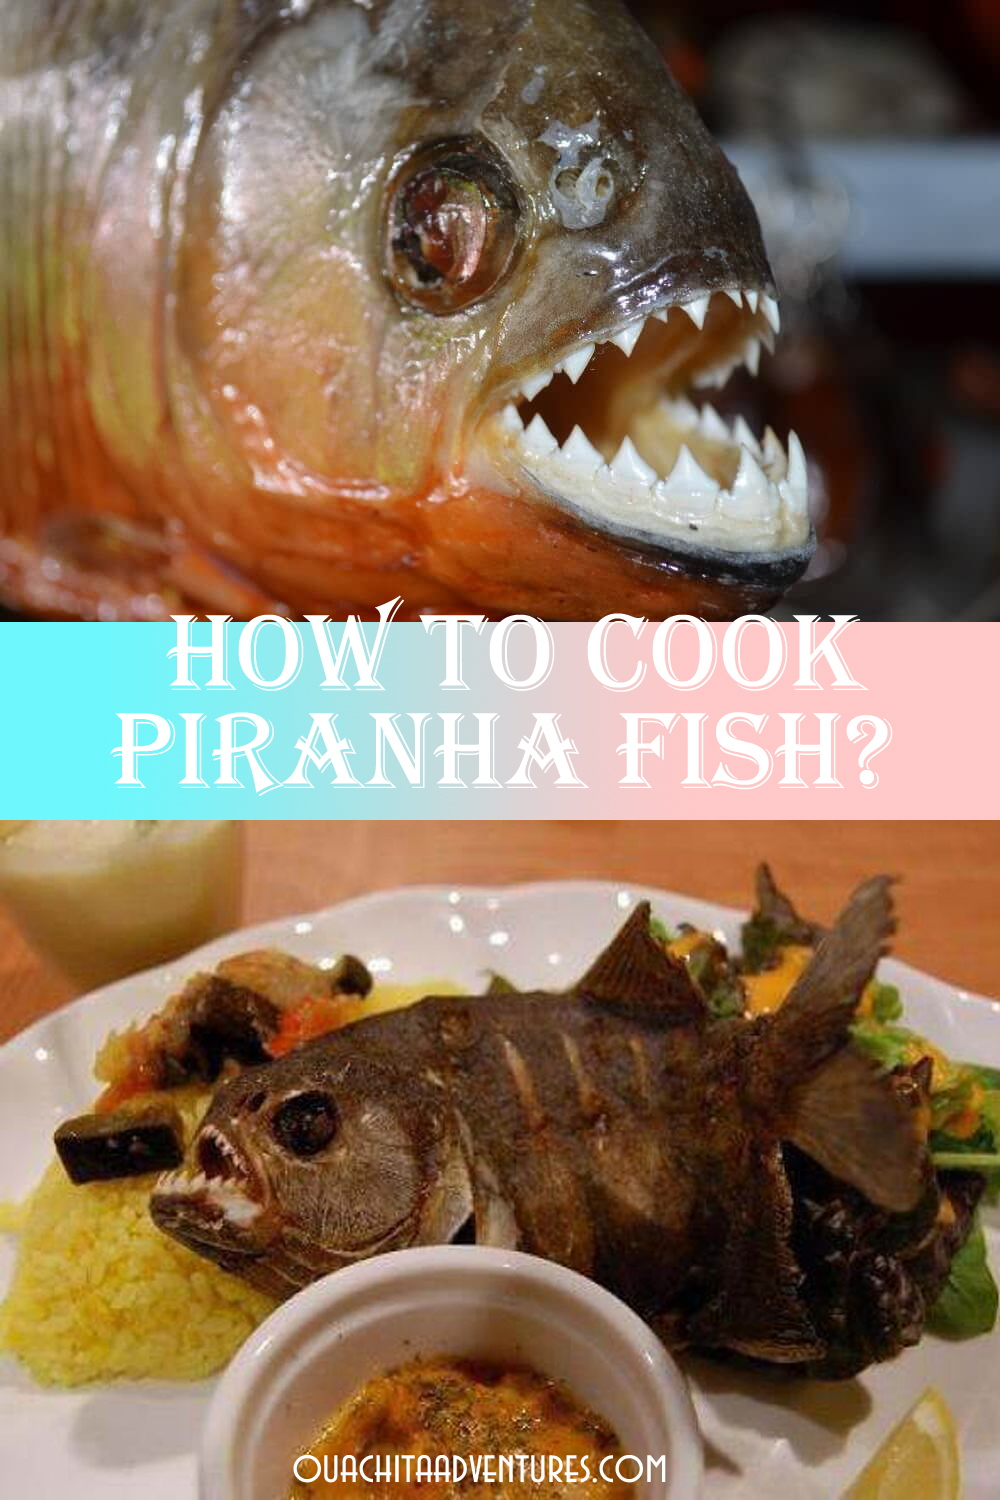 How to cook Piranha fish